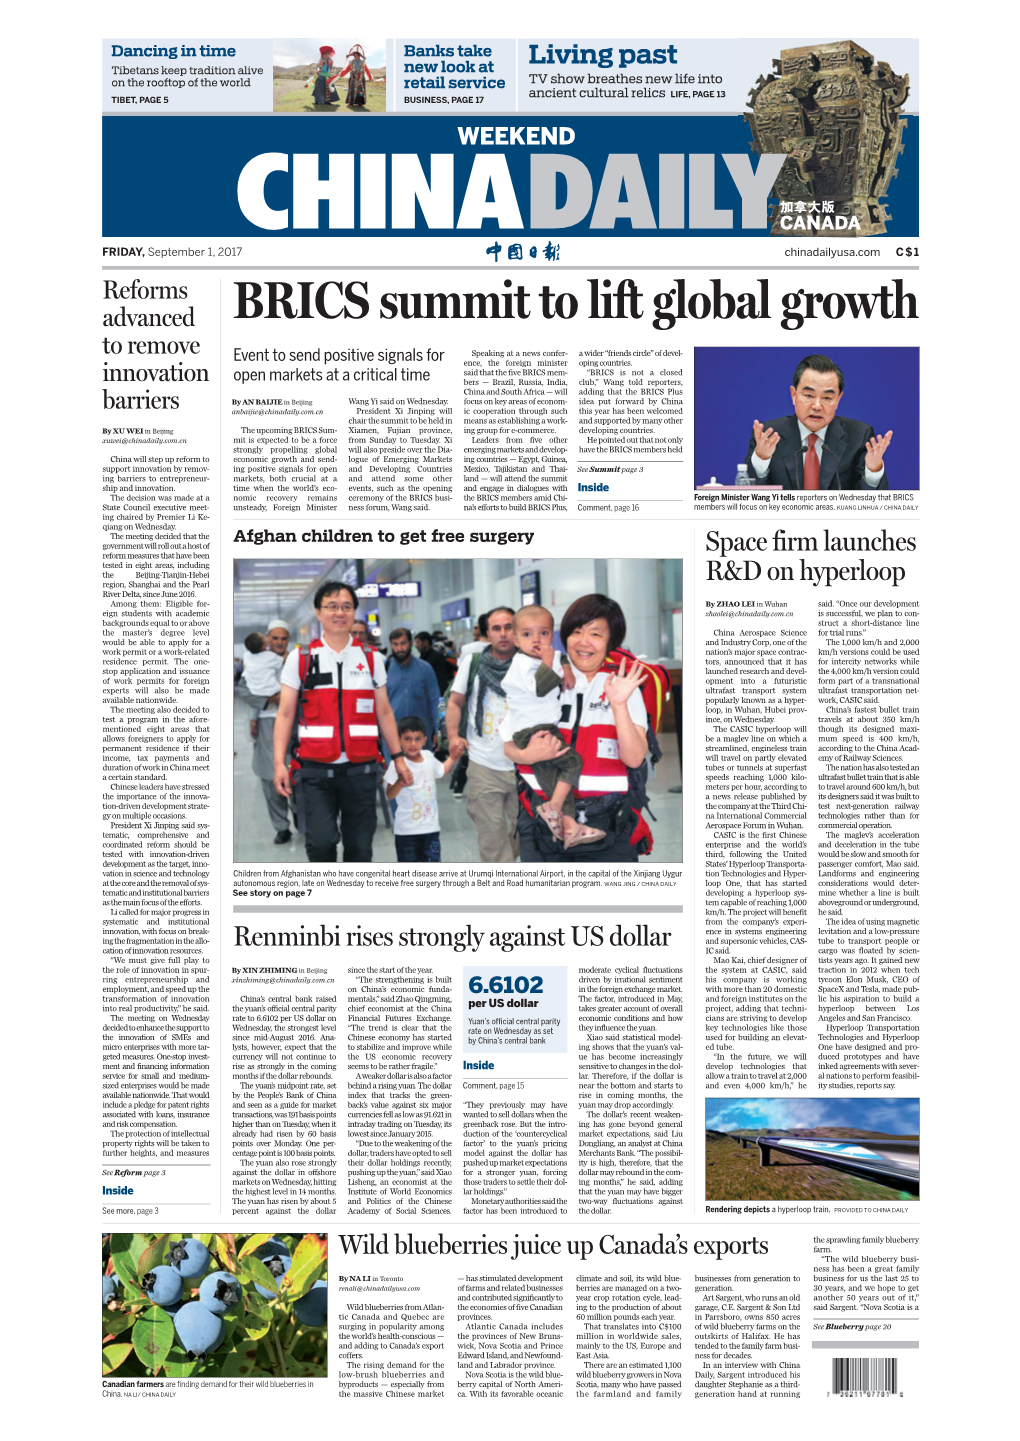 BRICS Summit to Lift Global Growth